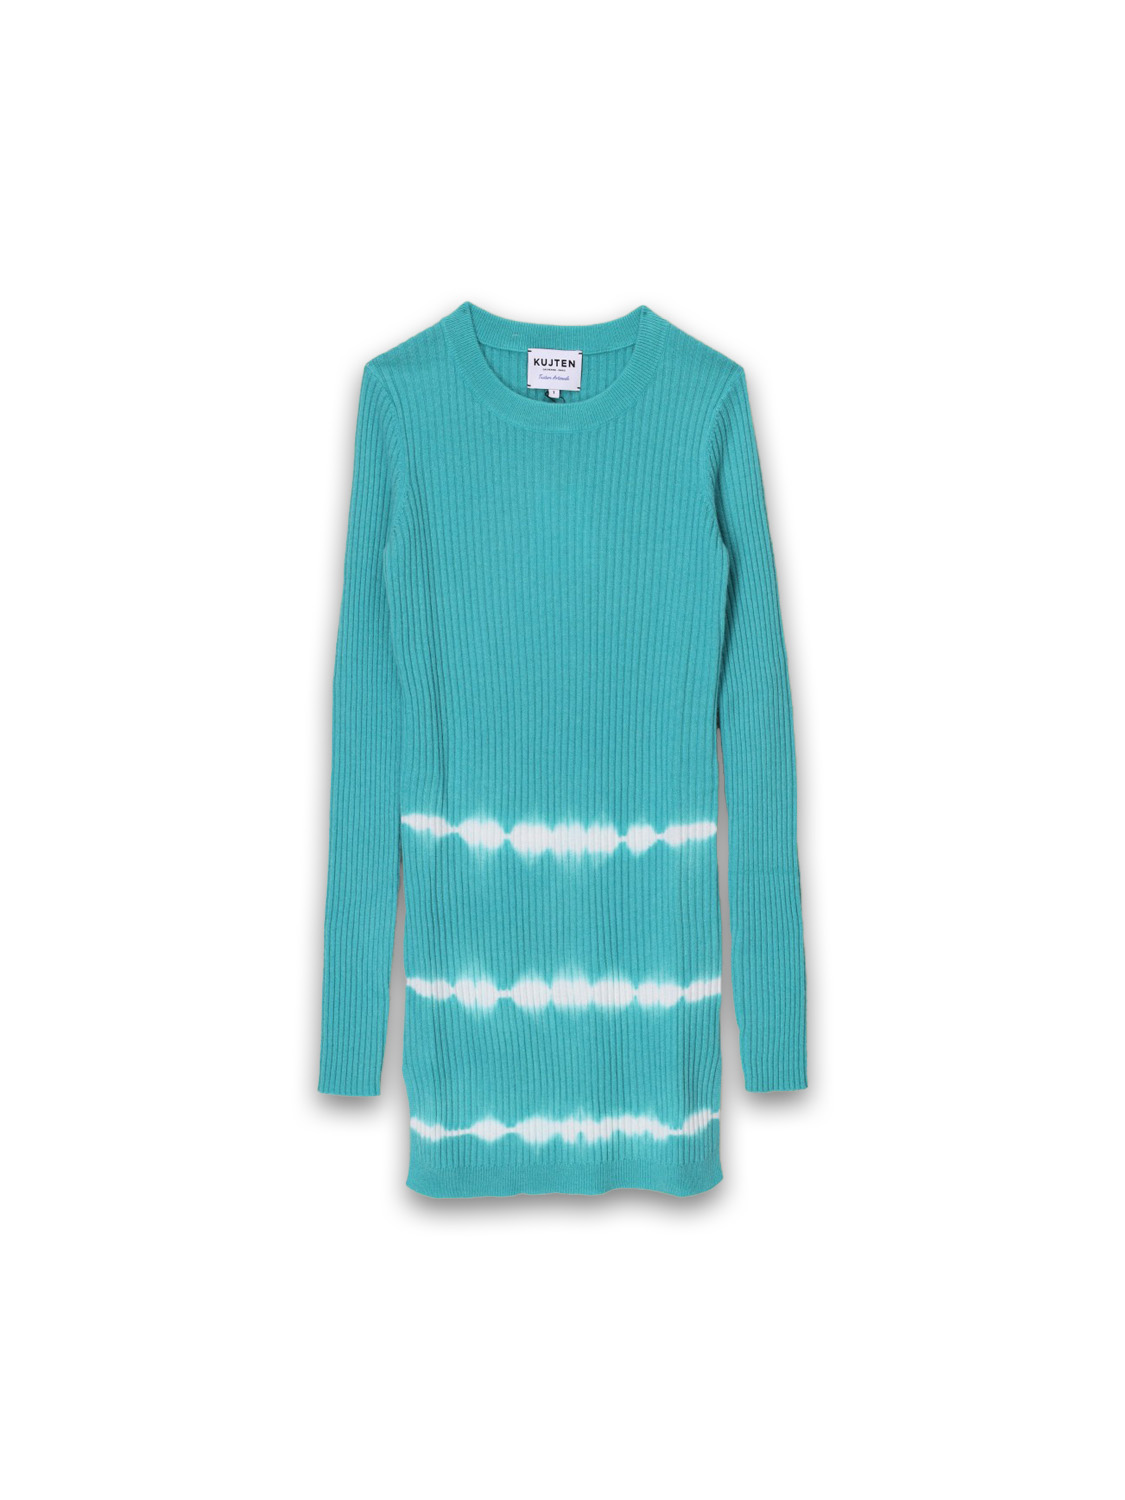 Kujten Bibili – Langer Ripp-Pullover aus cashmere mit Batik-Details 	  menta S/M